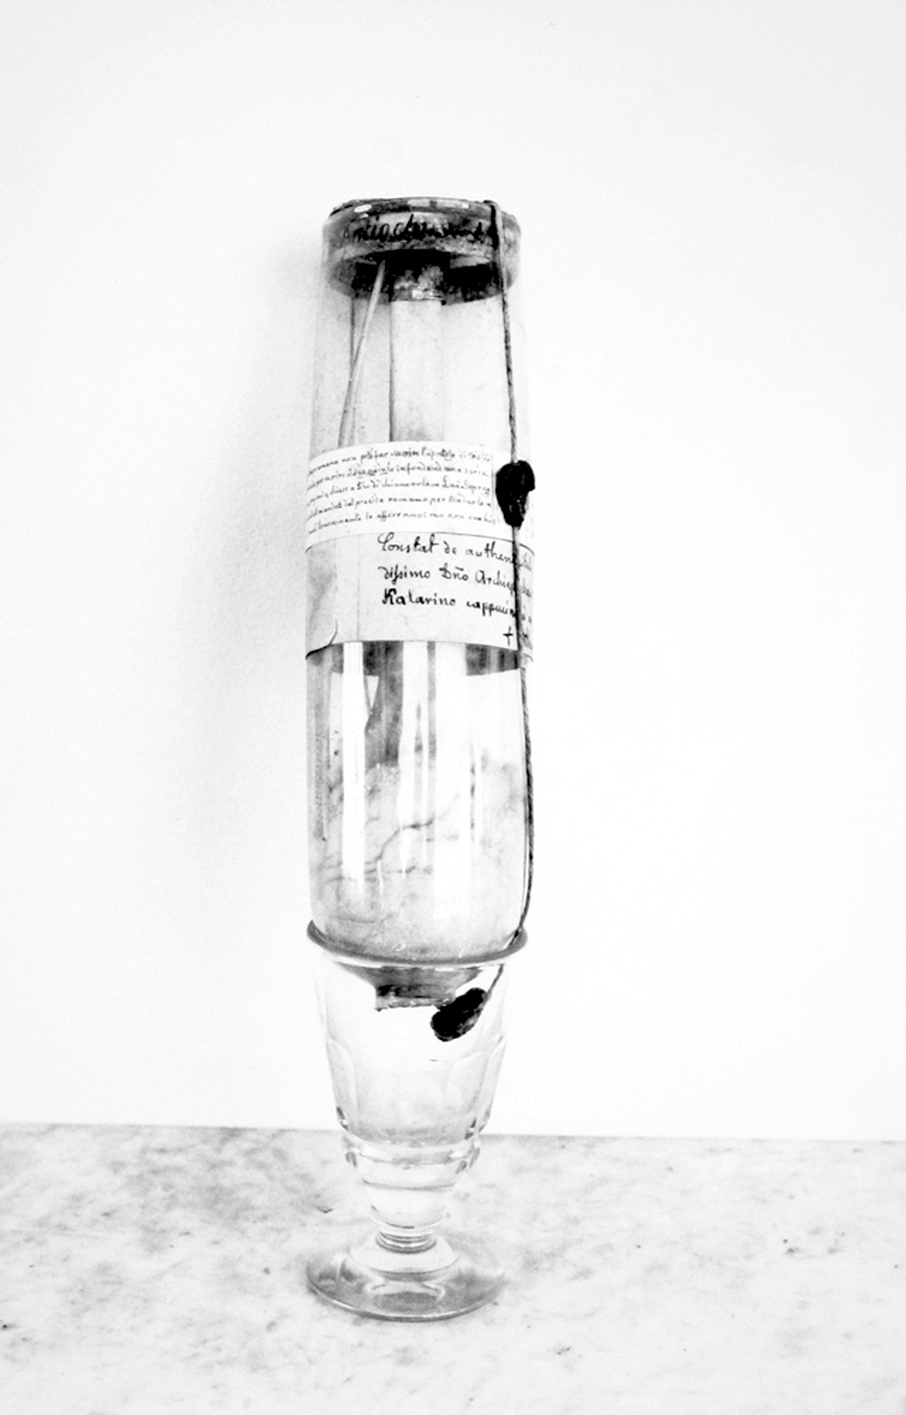 Reliquiario - a bicchiere, frammento